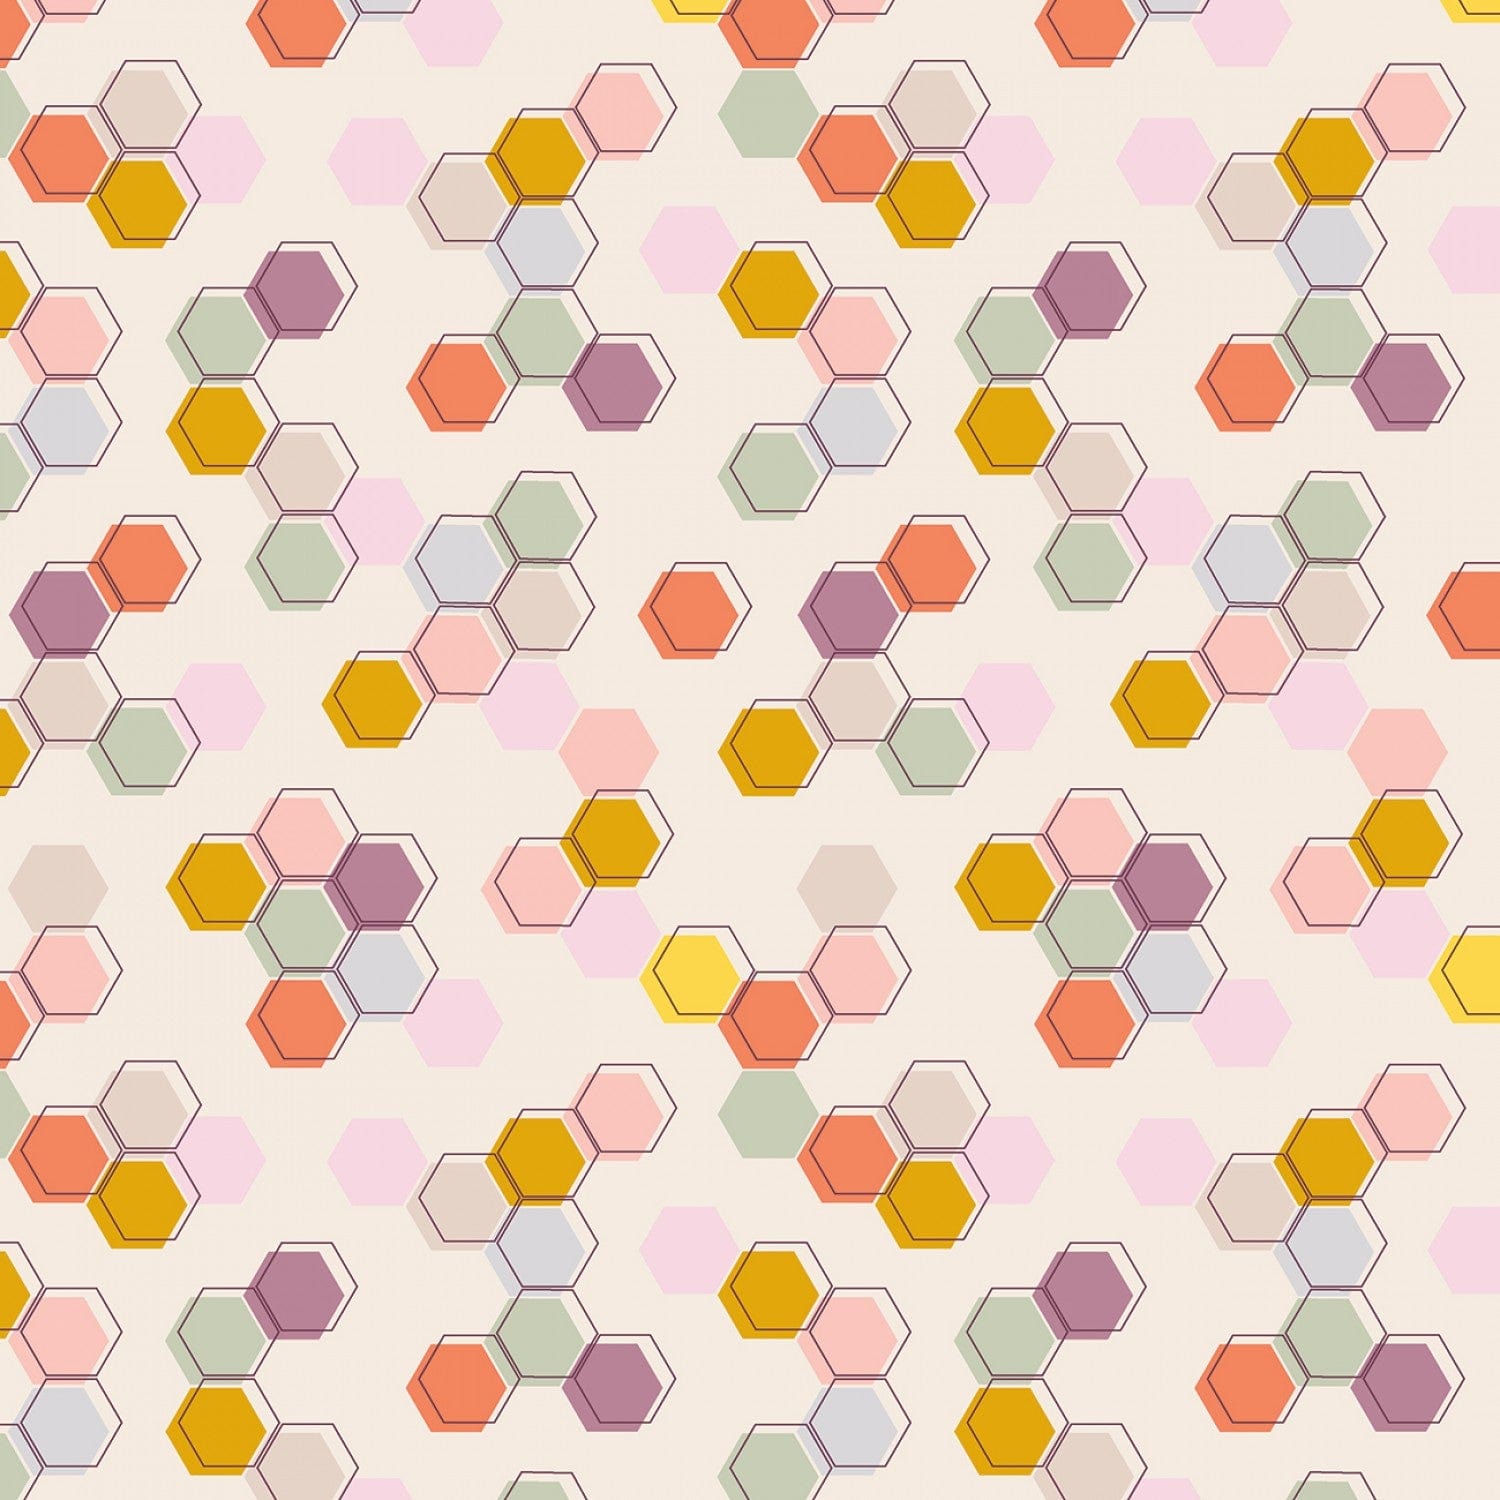 Harmony Honeycomb Cream - C11093R-CREAM -  Riley Blake - Flower Prints